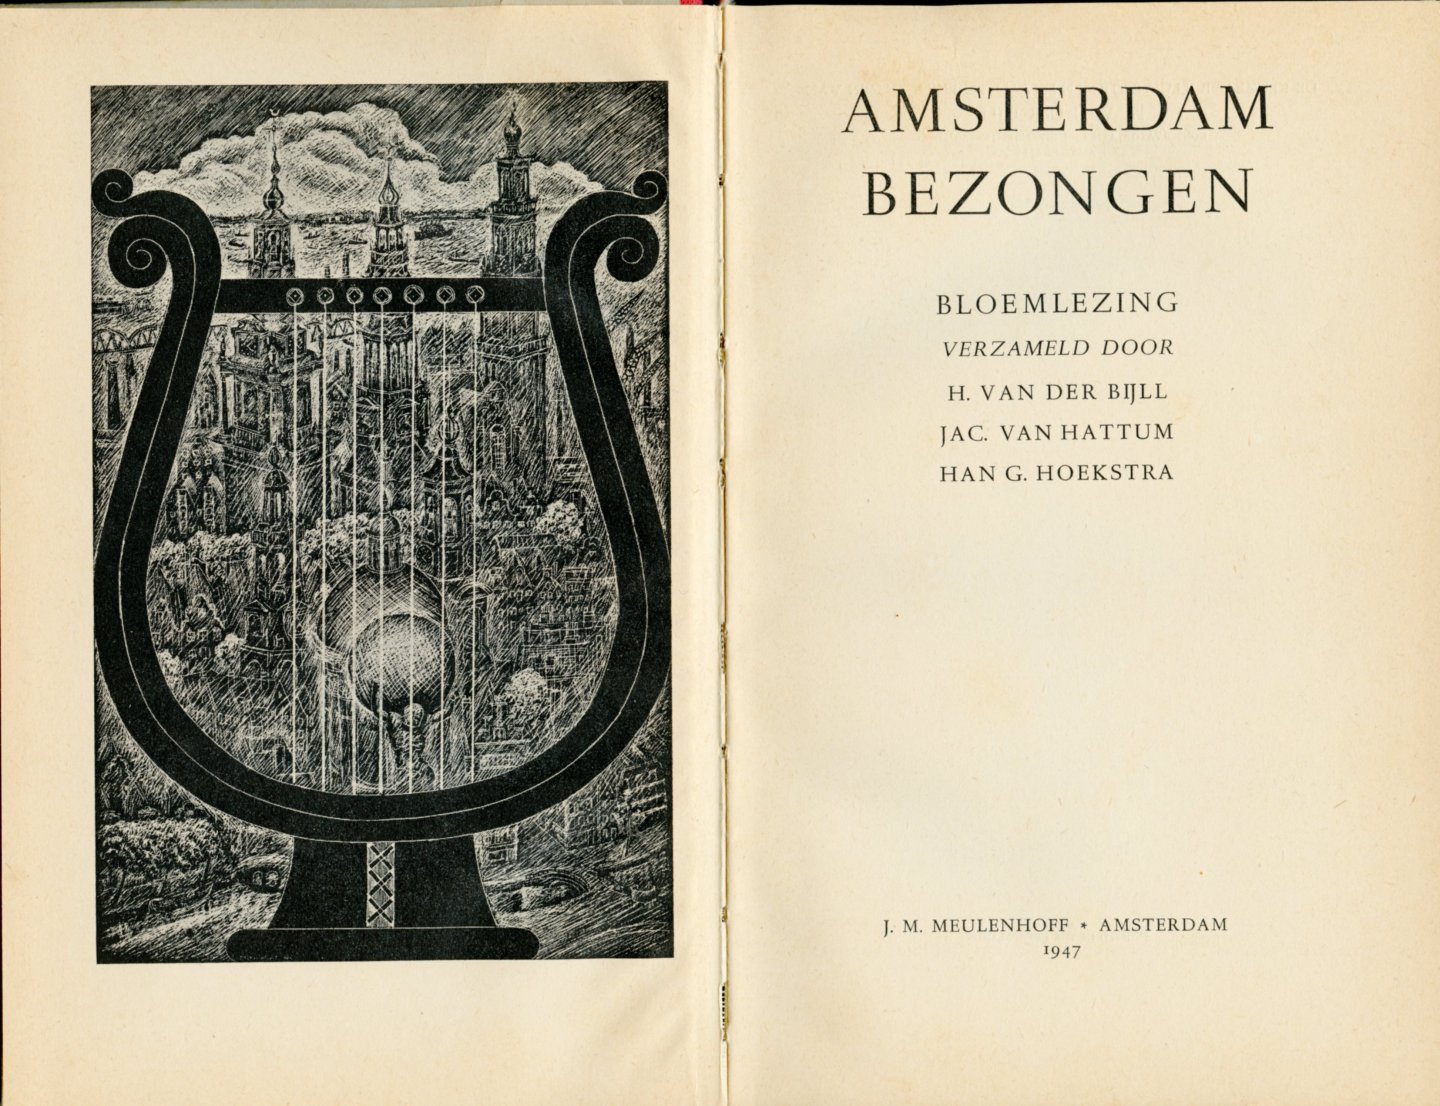 Bijll, H.v.d./ Hattum, Jac.v./ Hoekstra, Han G. - Amsterdam bezongen. 1530-1946. Bloemlezing verzameld door...